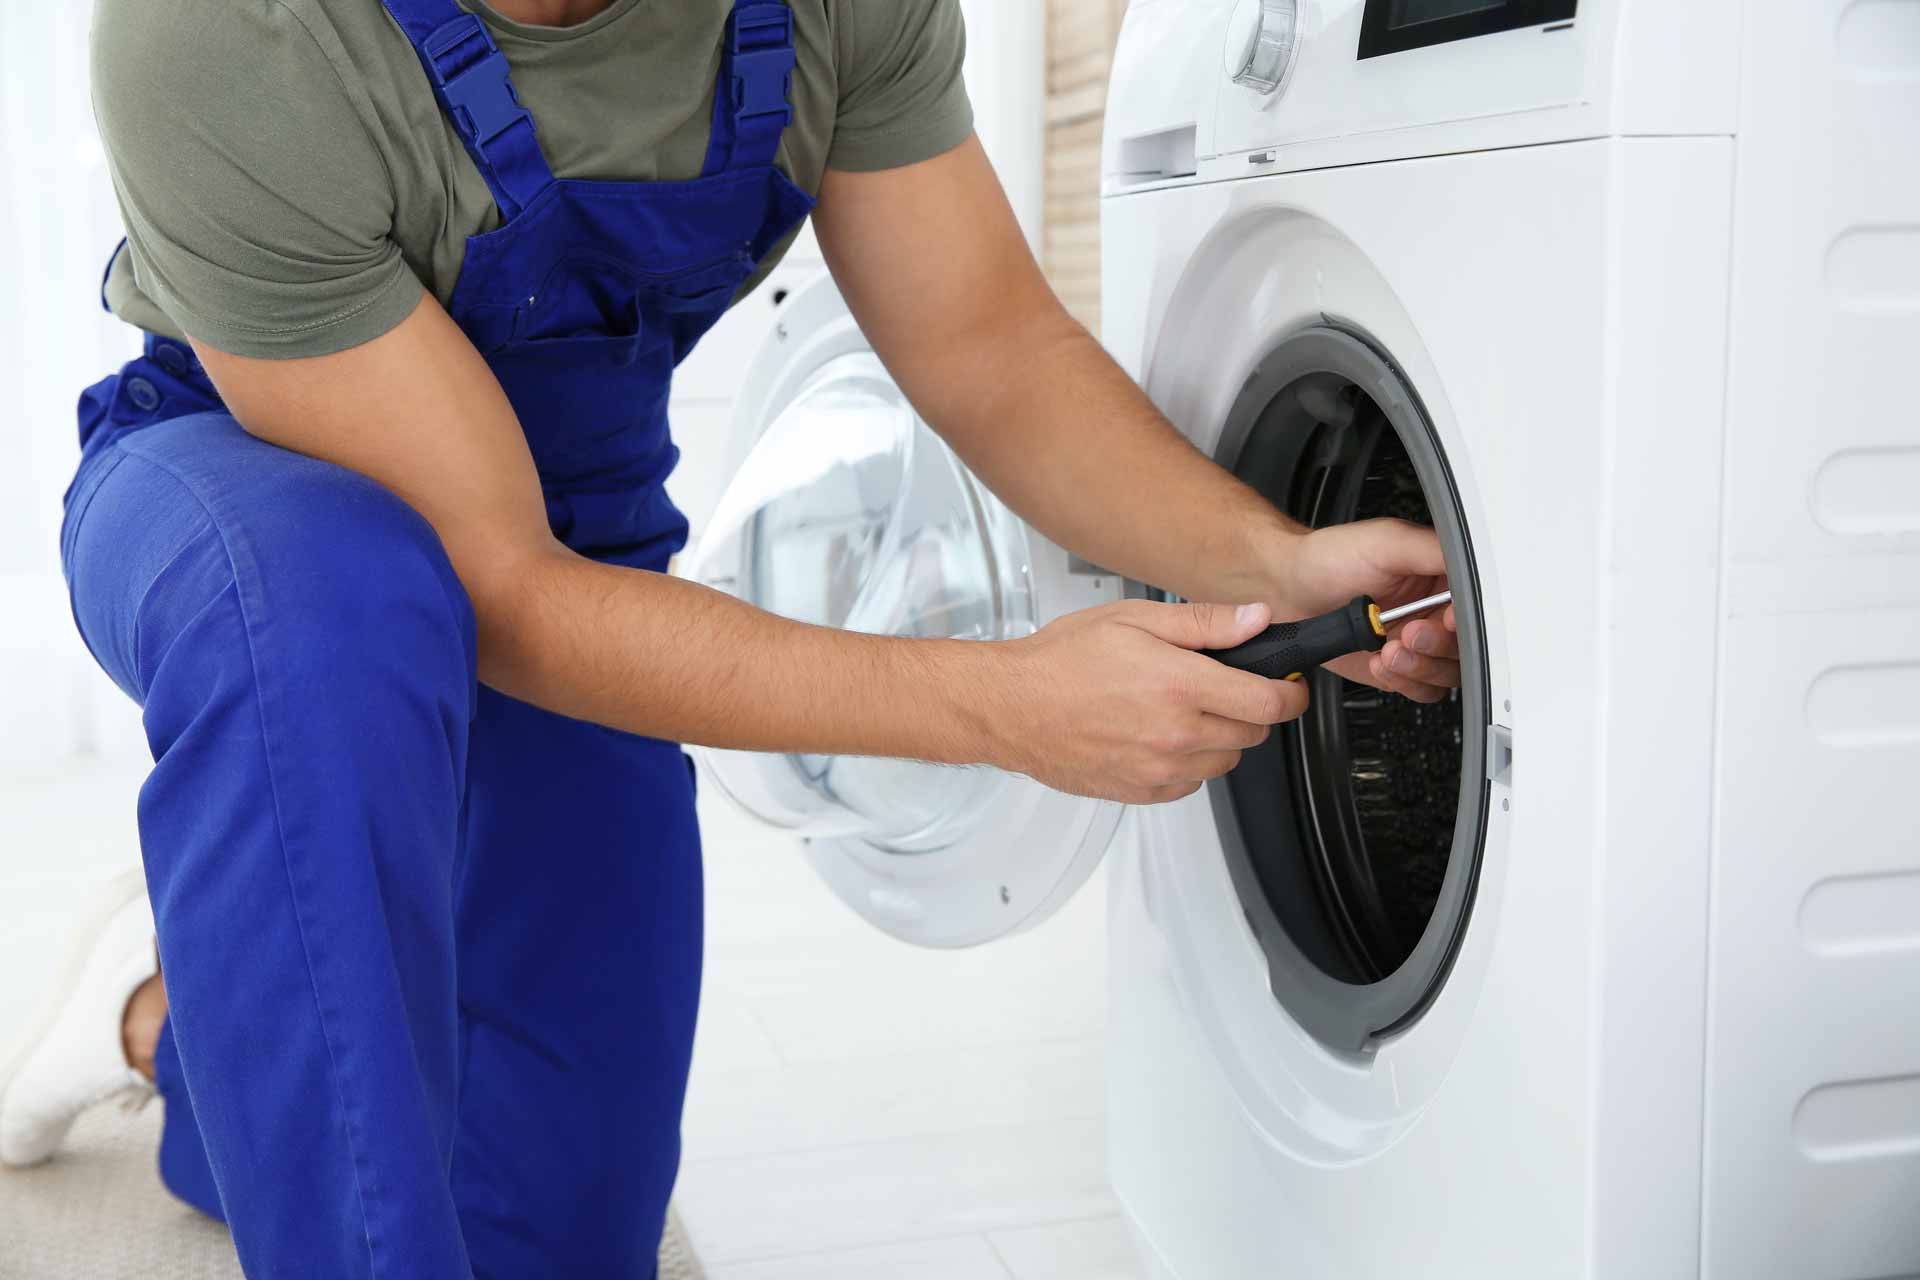 Technician kneeling to repair a washer/dryer